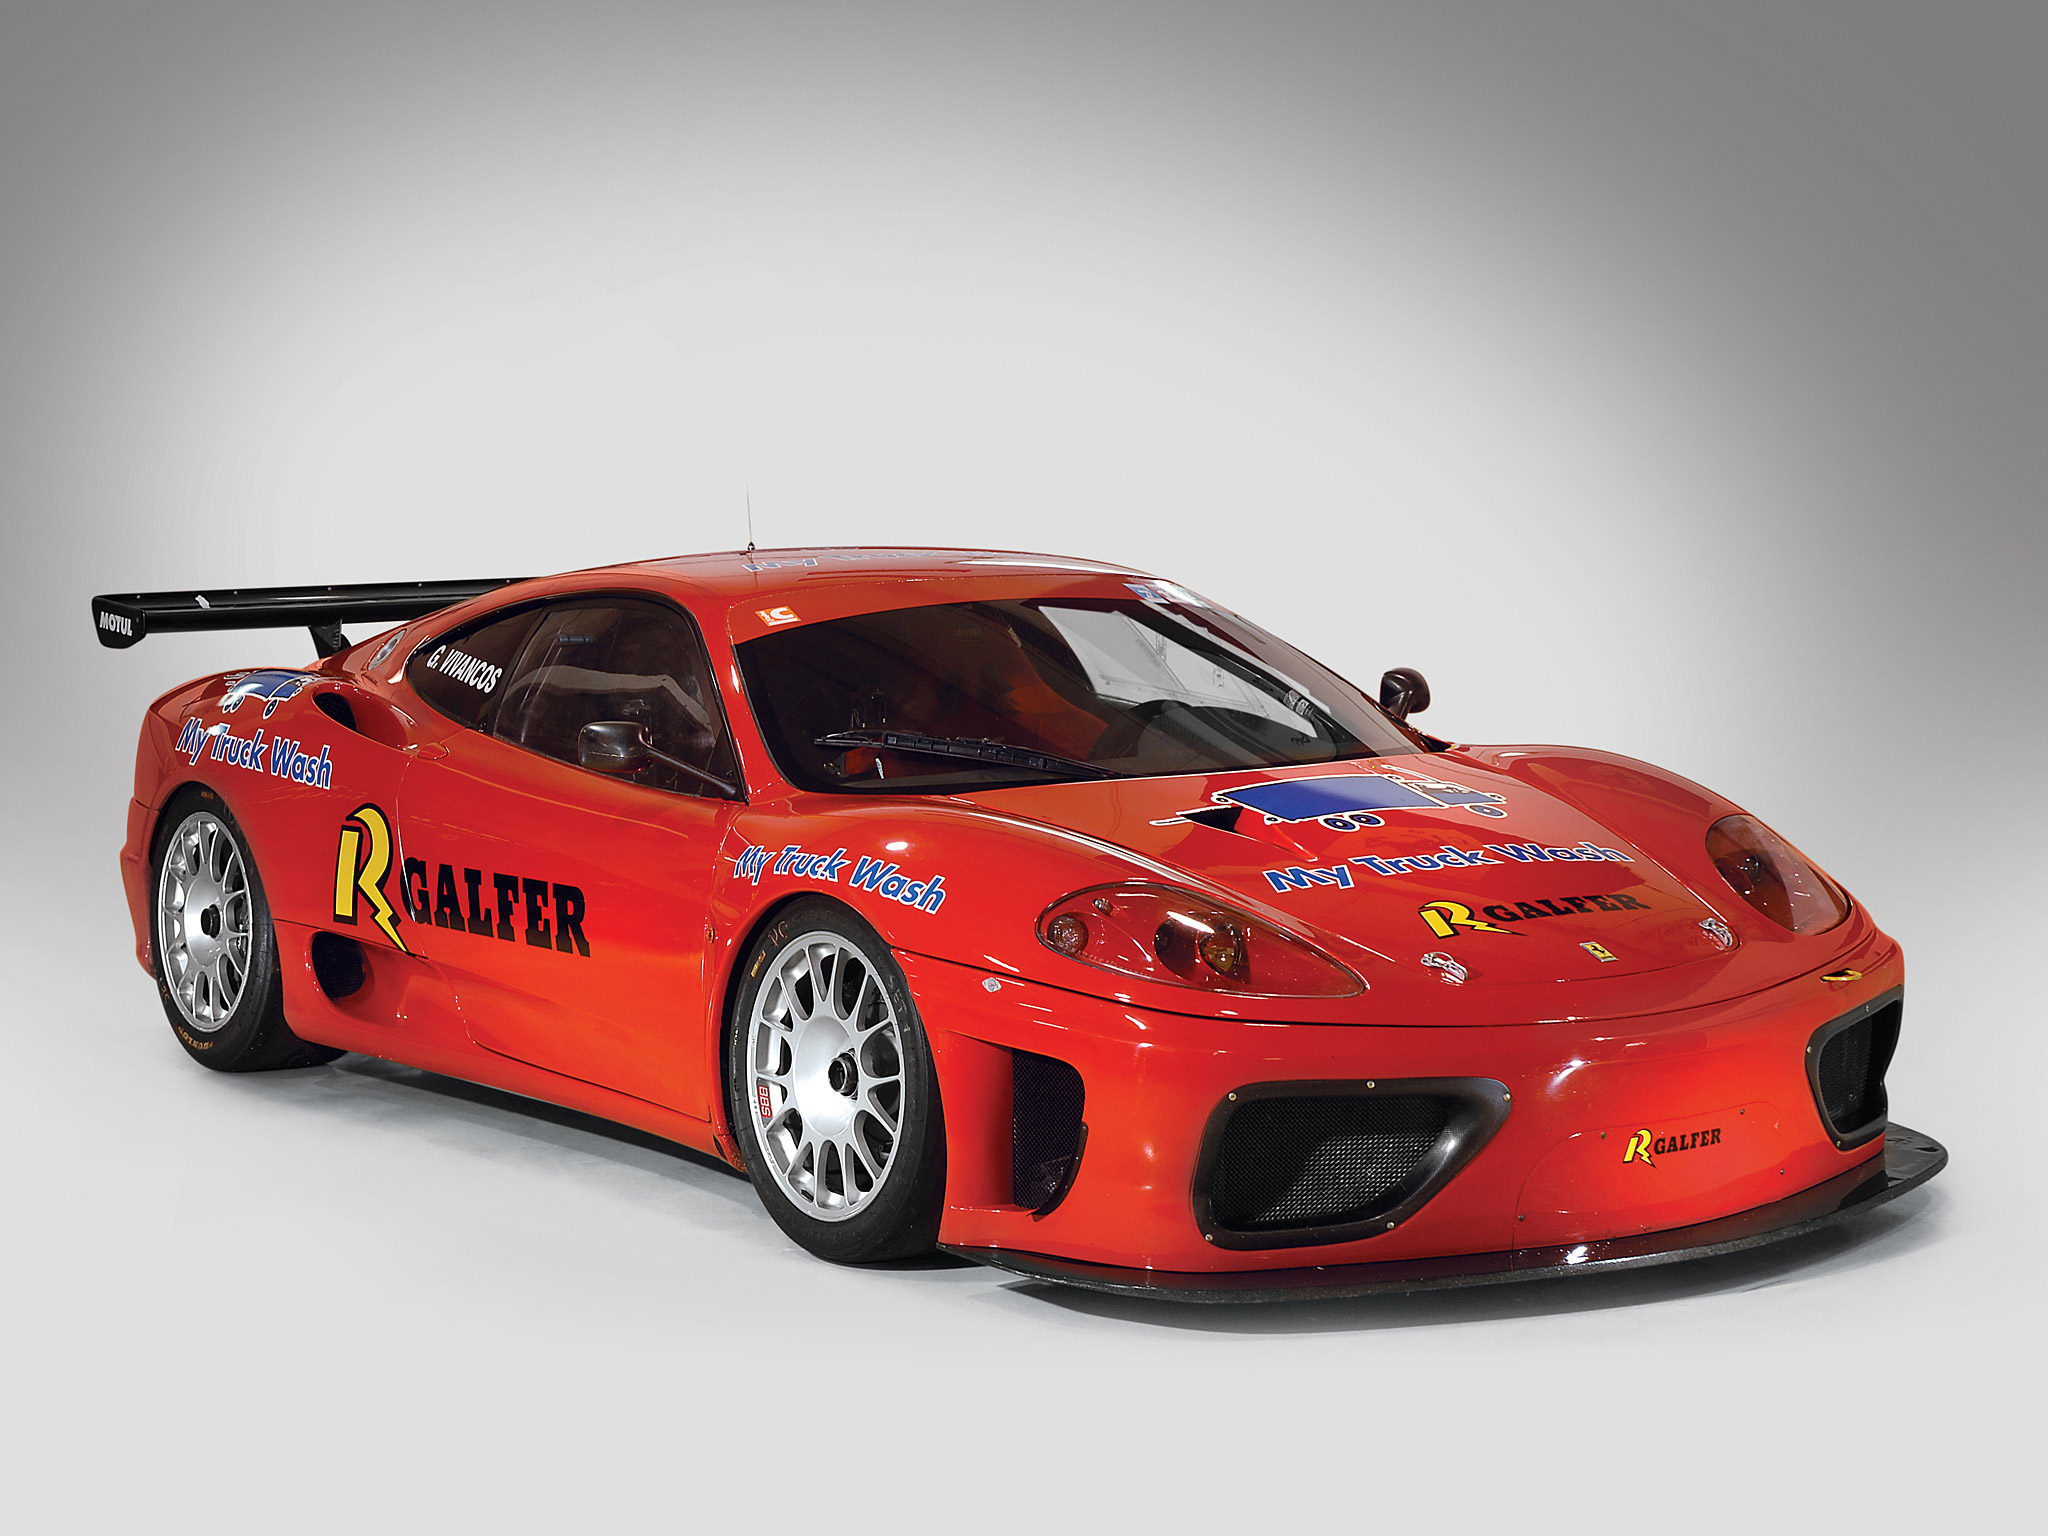 Los mejores fondos de pantalla de Ferrari 360Gt para la pantalla del teléfono